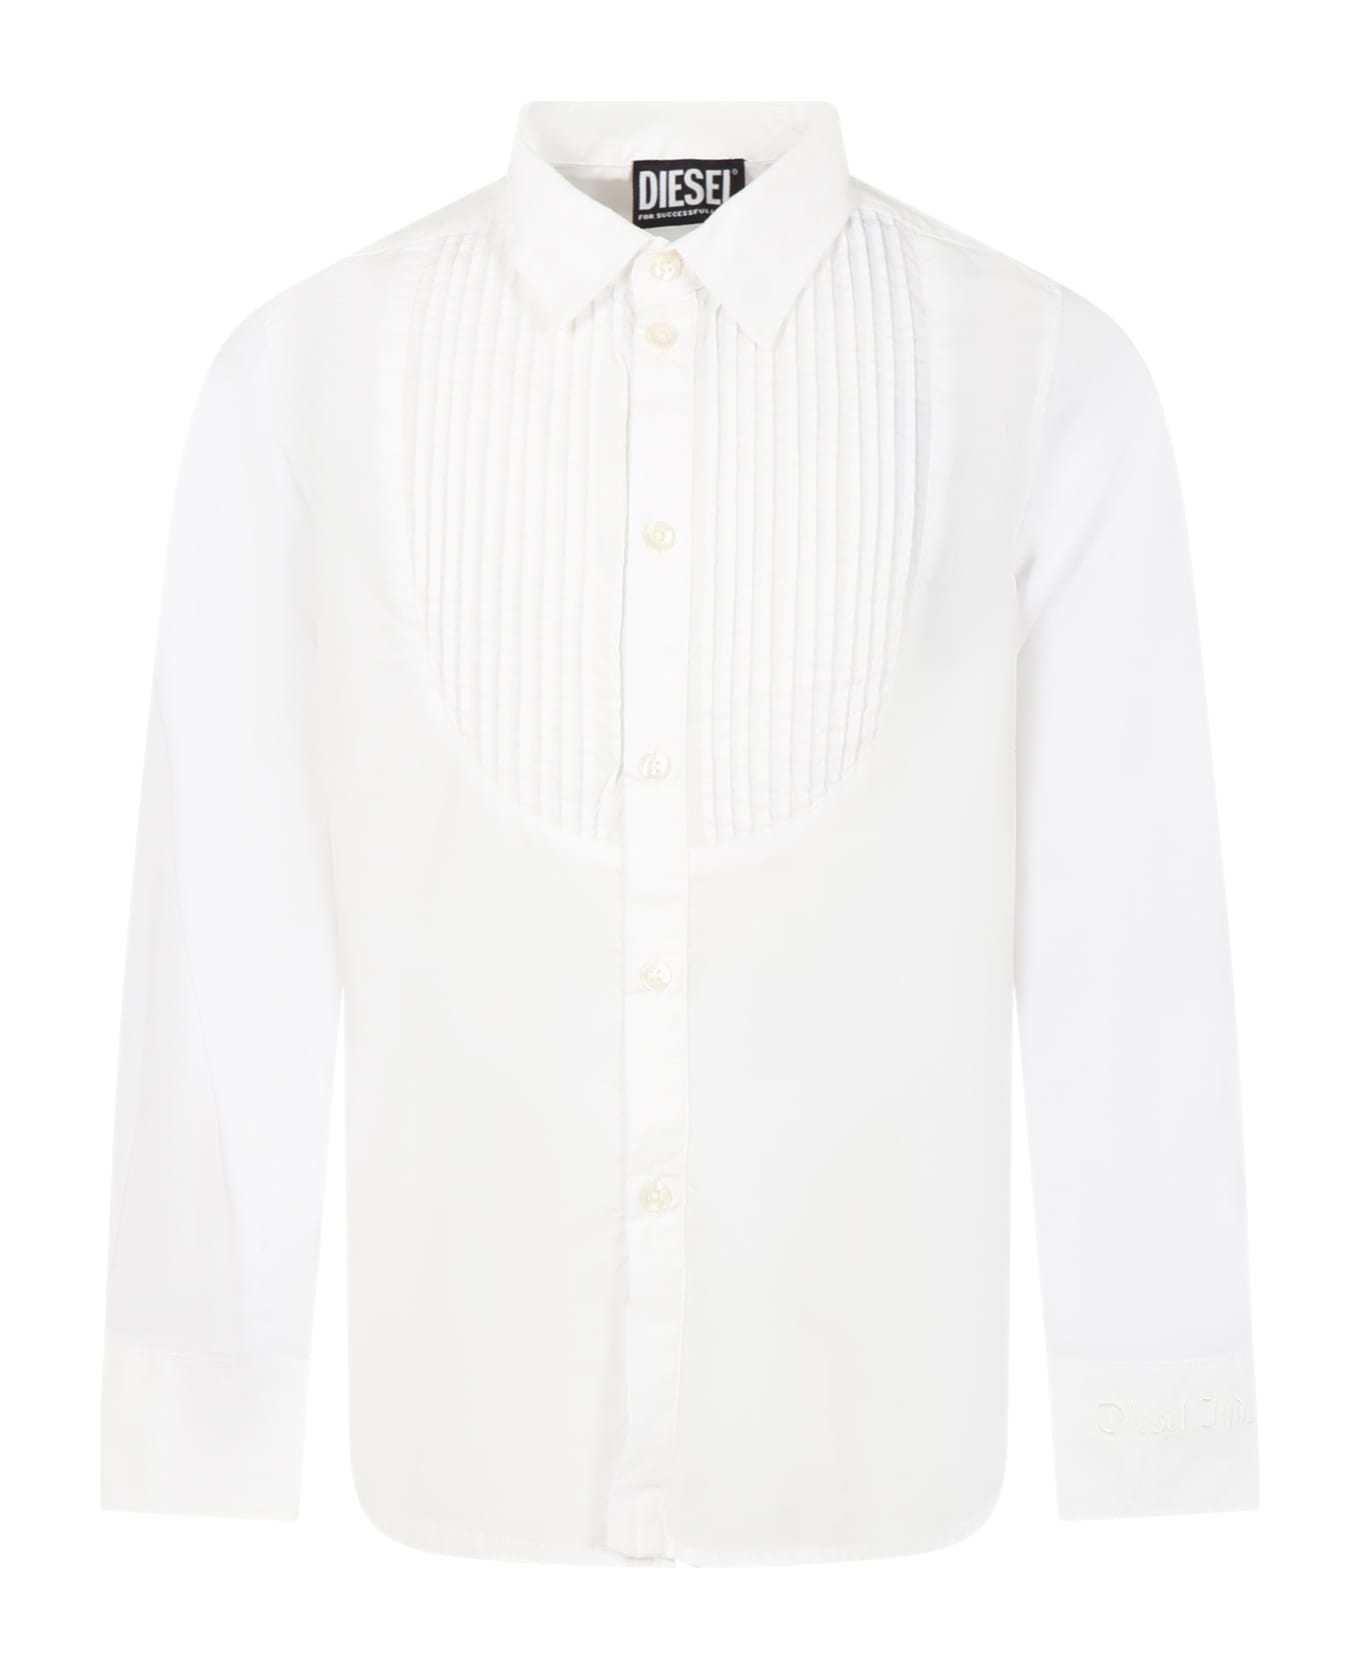 Diesel White Shirt For Boy With Logo - White シャツ